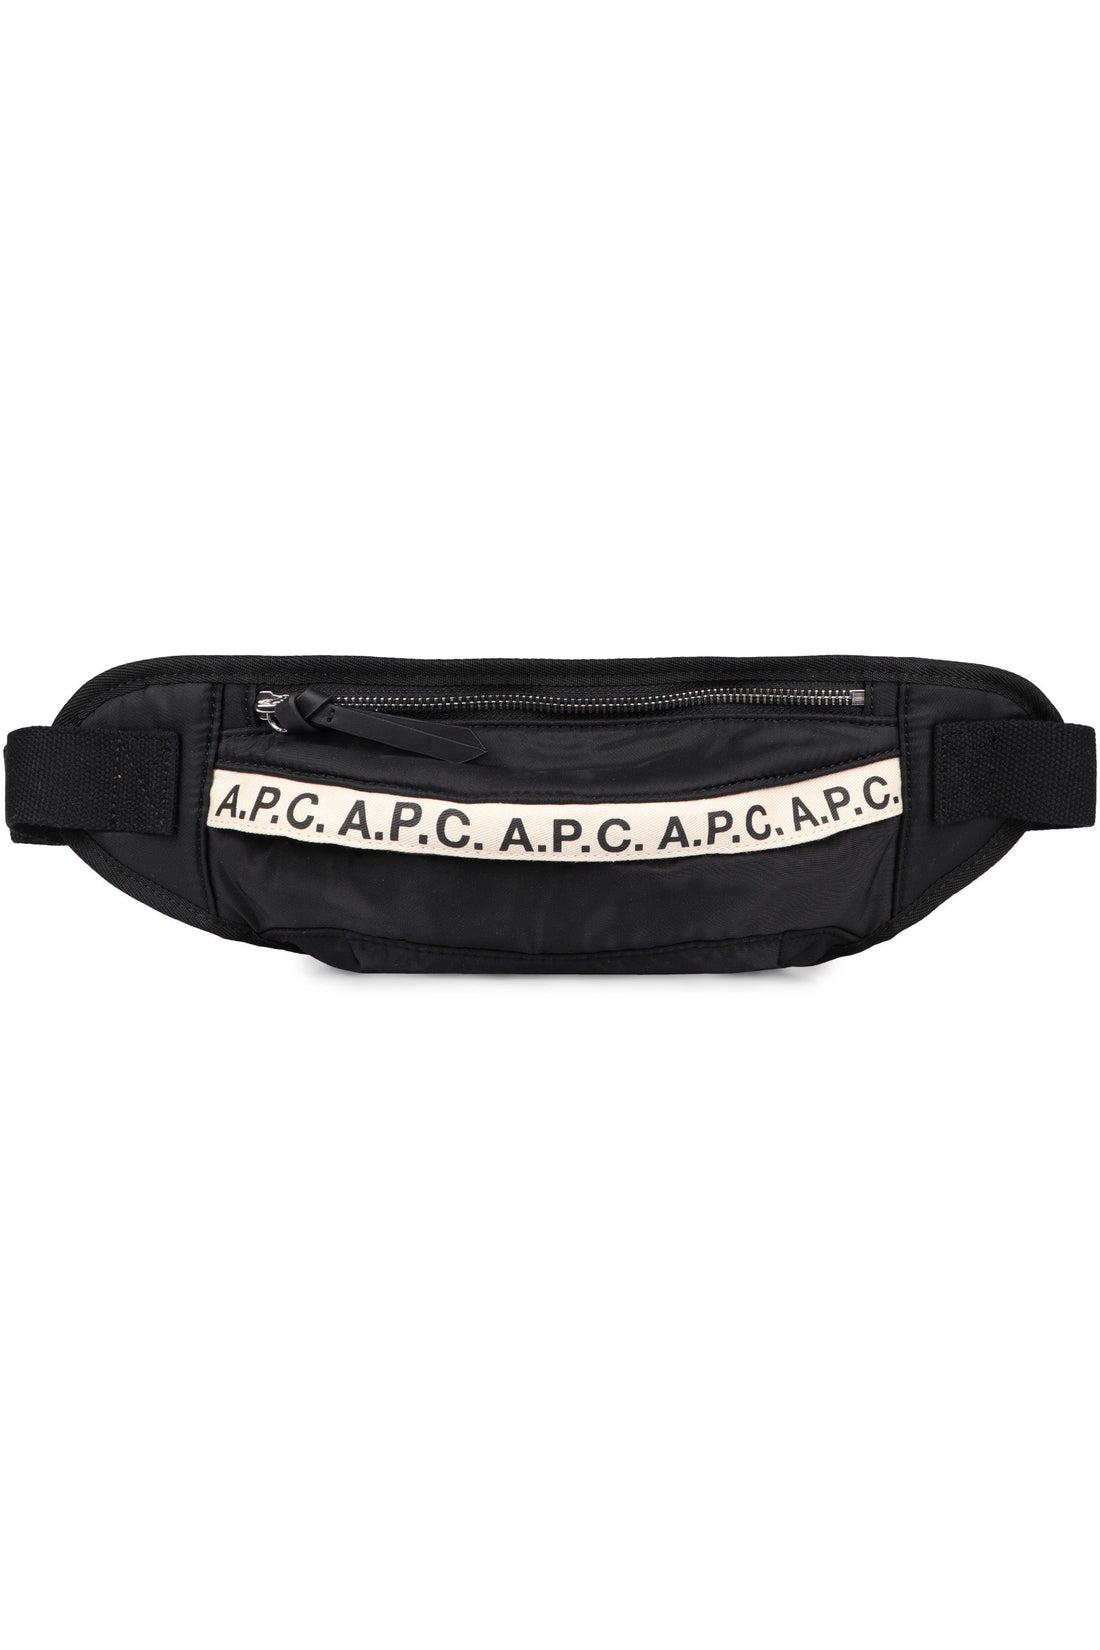 A.P.C.-OUTLET-SALE-Technical fabric belt bag with logo-ARCHIVIST